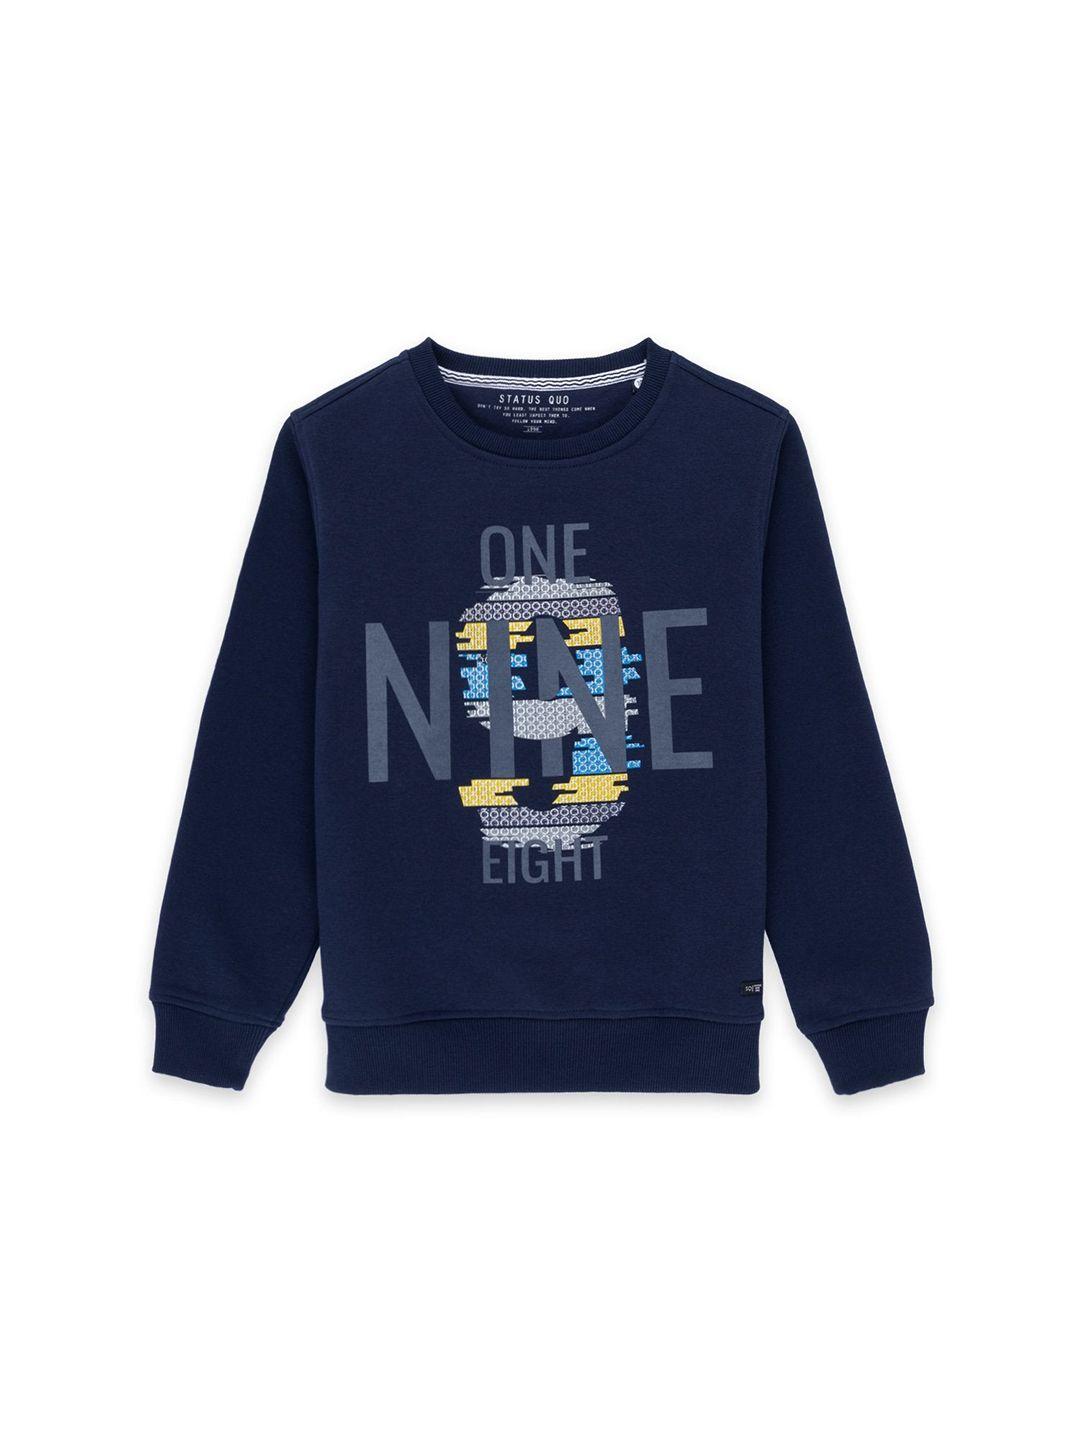 Status Quo Boys Navy Blue Printed Sweatshirt